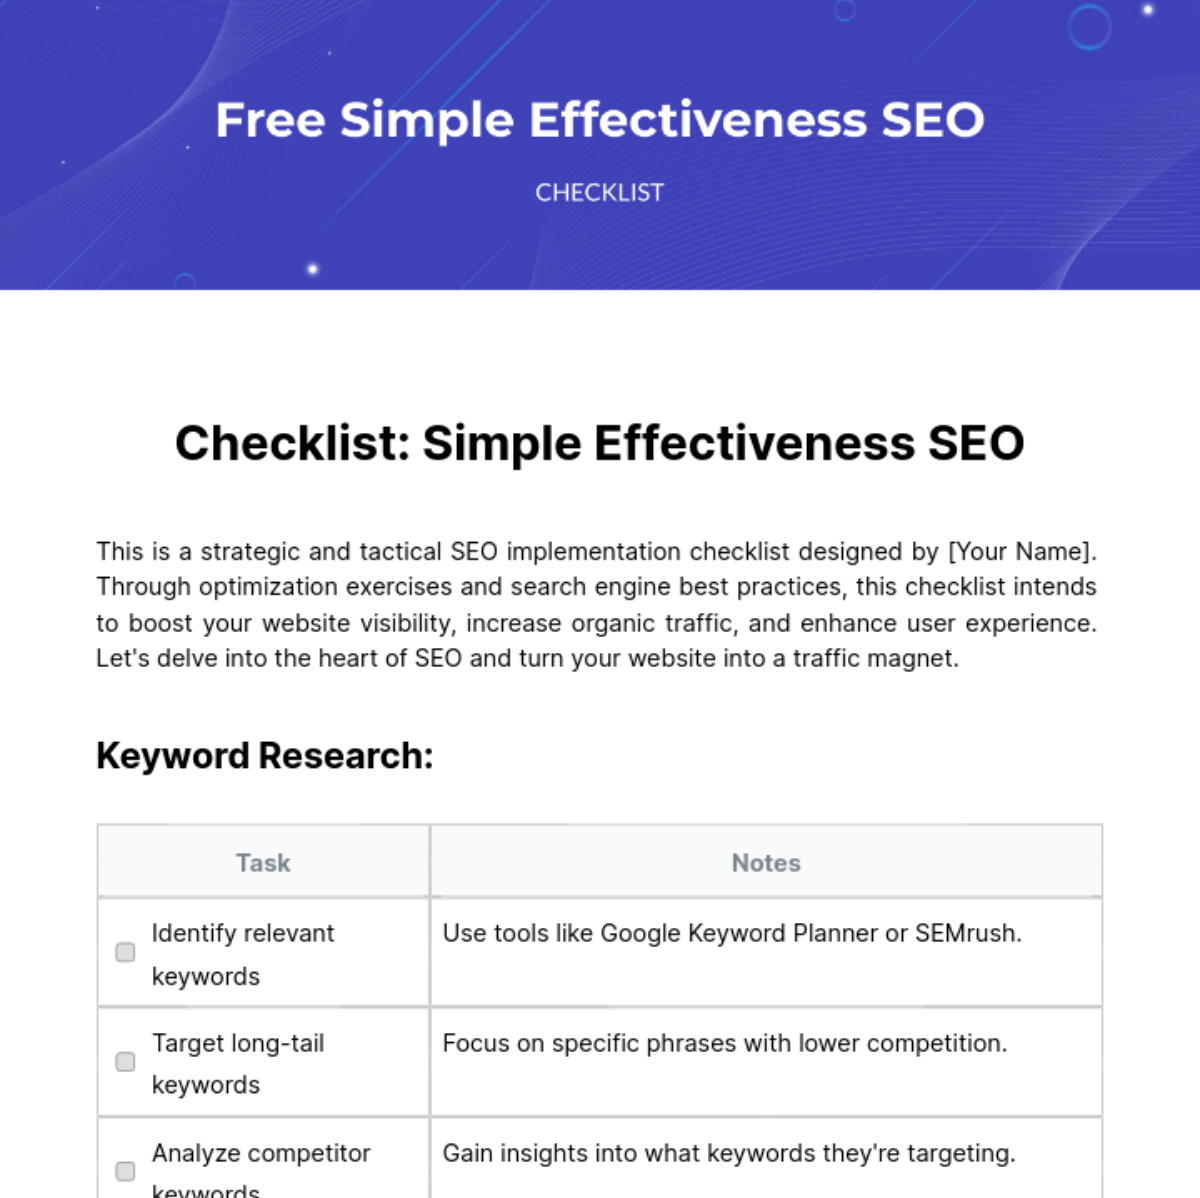 Free Simple Effectiveness SEO Checklist Template